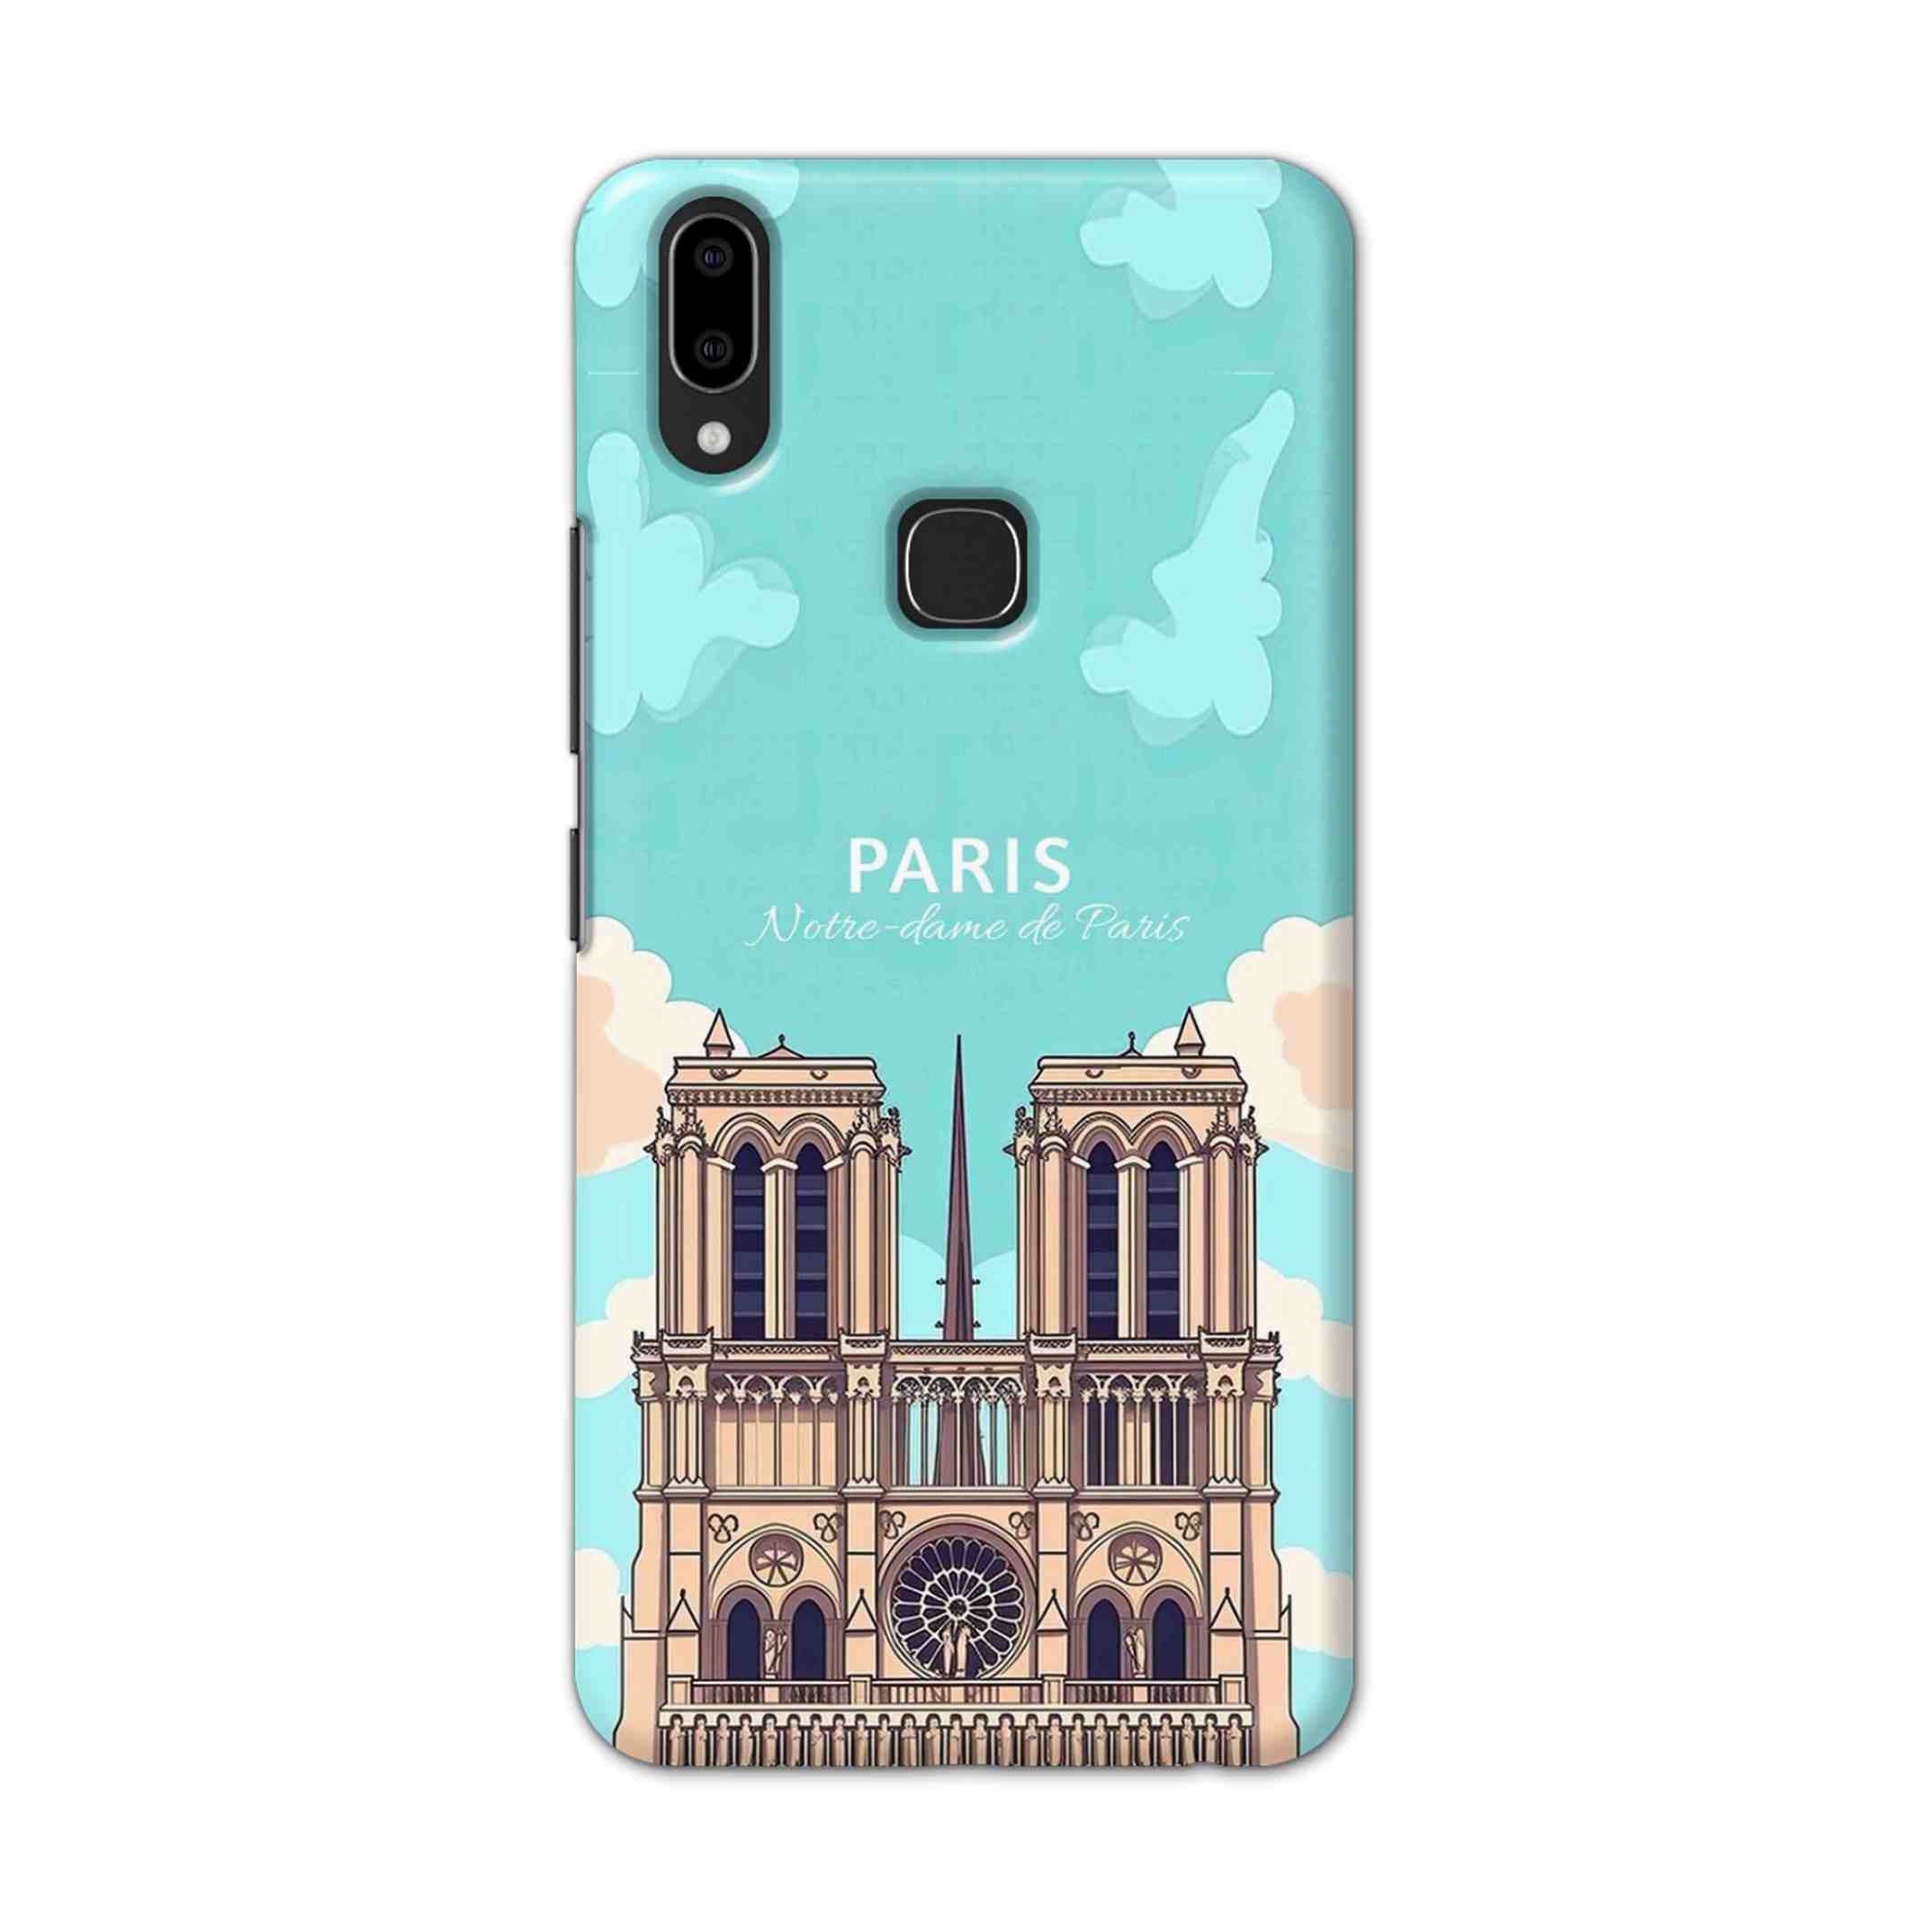 Buy Notre Dame Te Paris Hard Back Mobile Phone Case Cover For Vivo V9 / V9 Youth Online